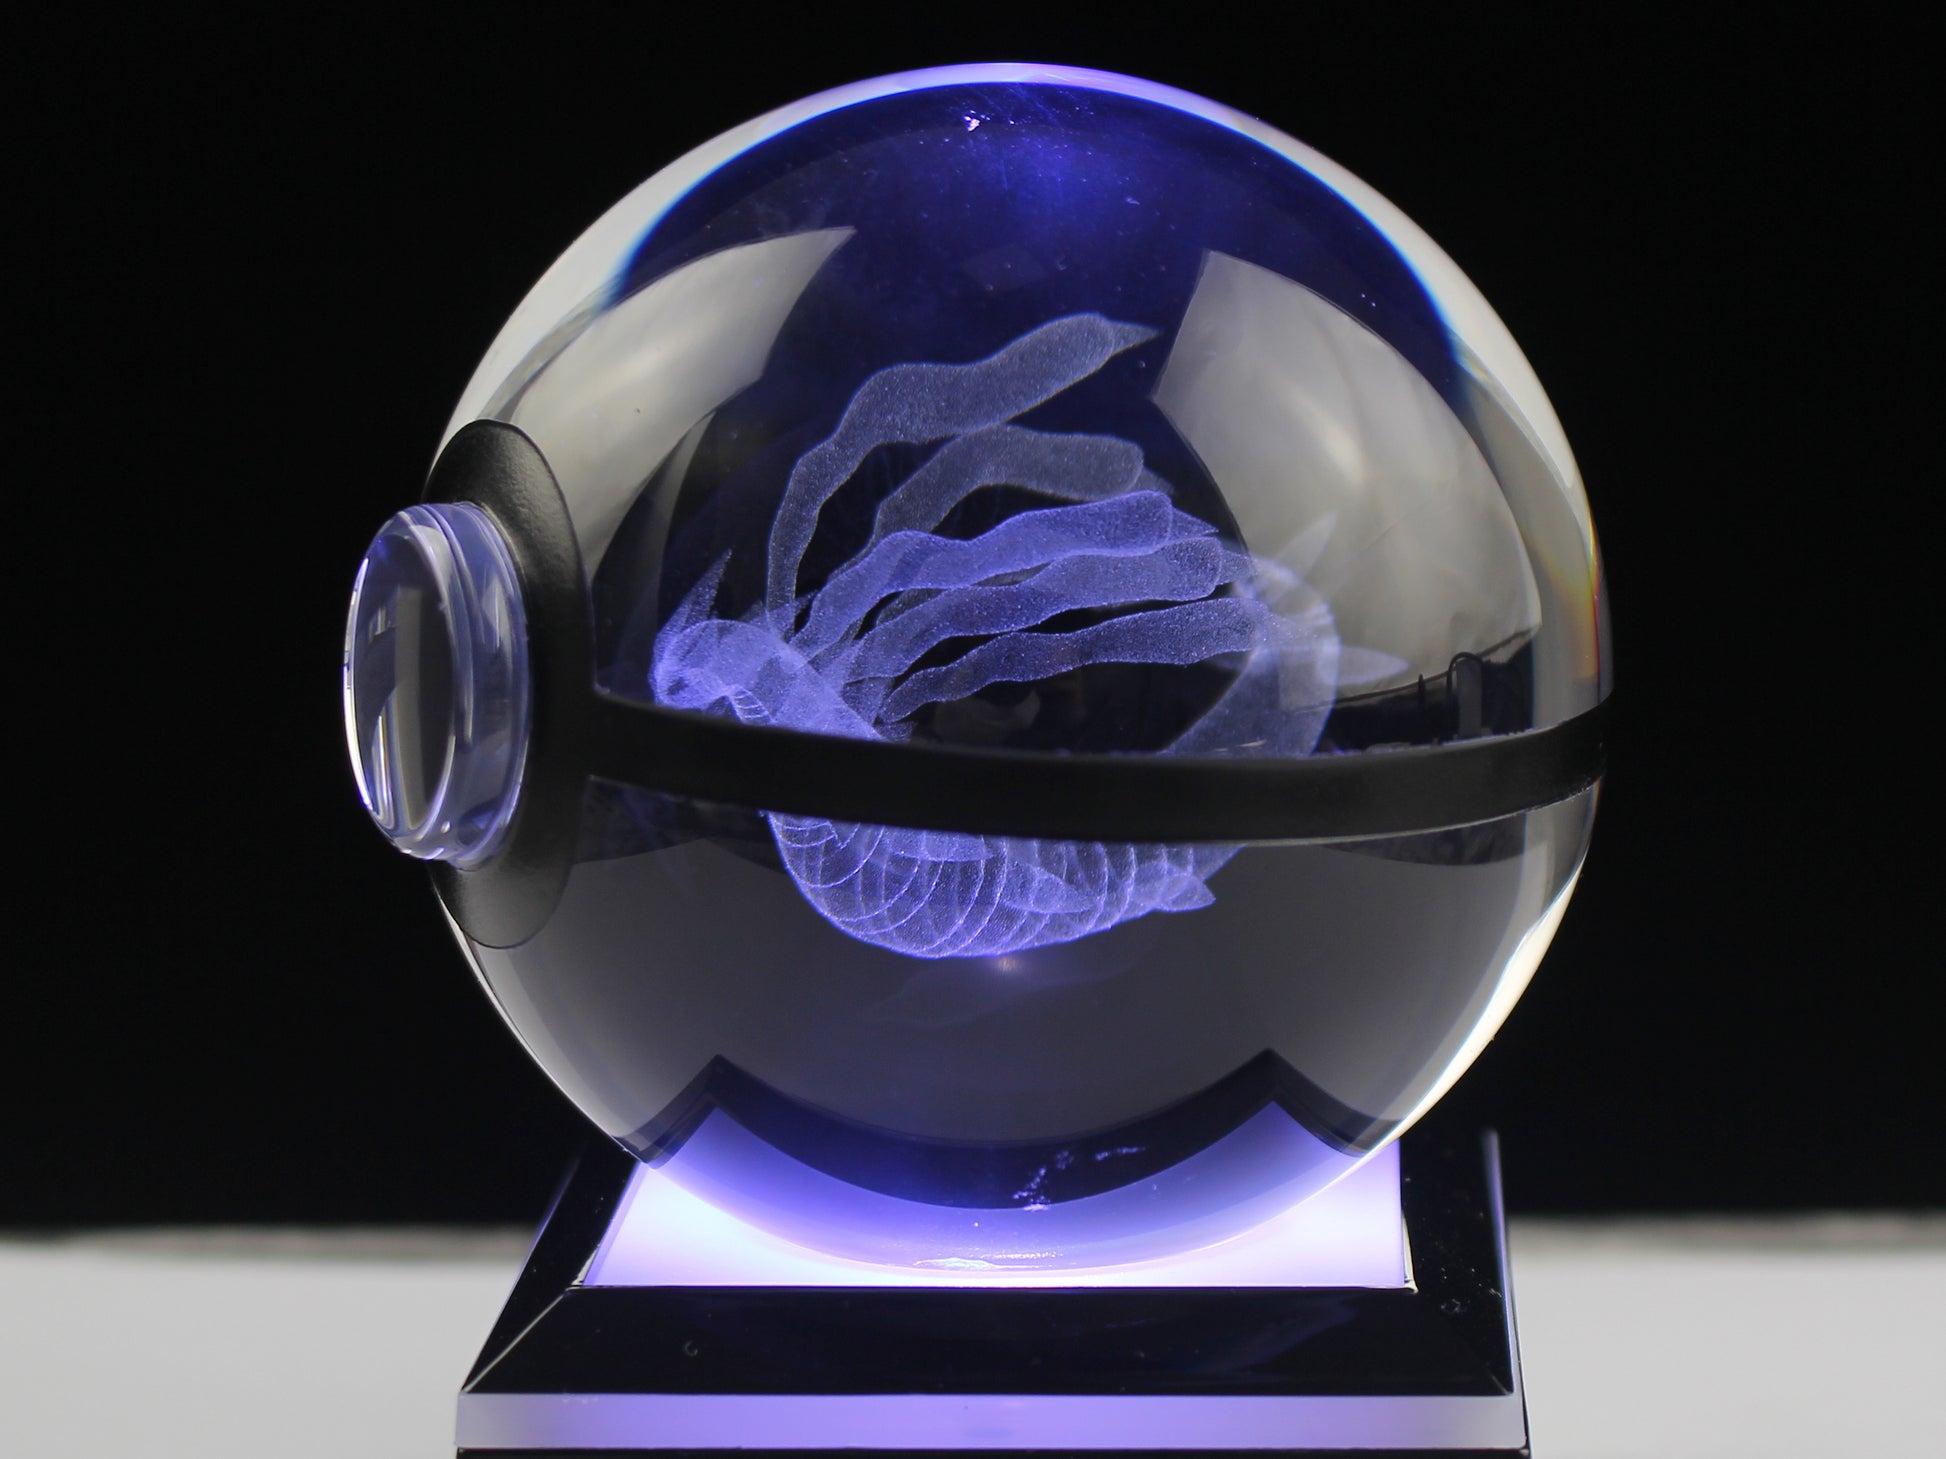 Pokemon Giratina Origin 3D model 3D printable